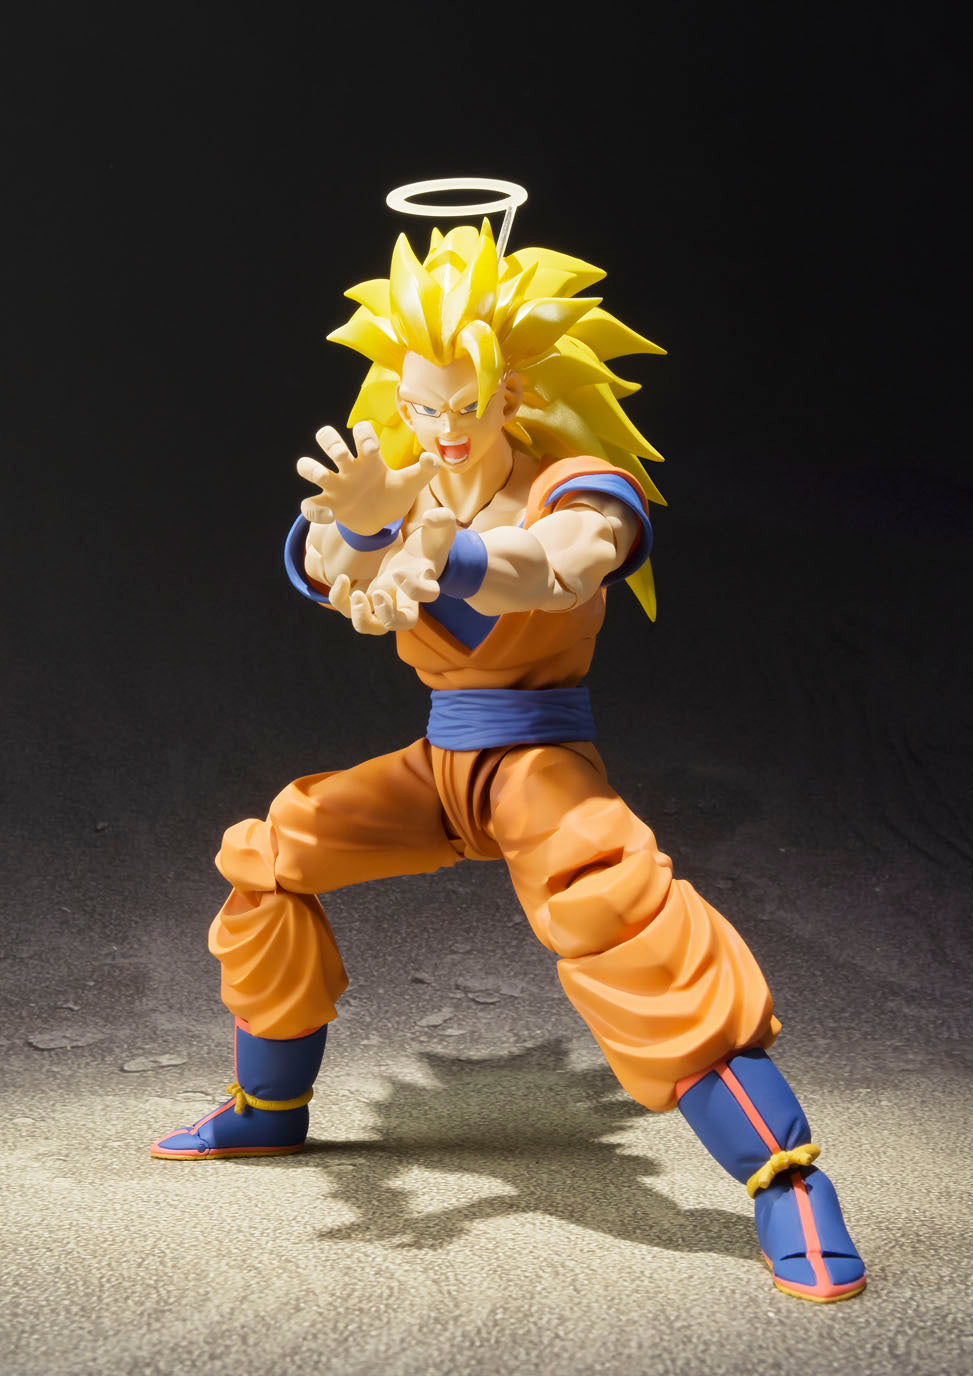 Super Saiyan 3 Goku "DRAGON BALL Z", TAMASHII NATIONS S.H.Figuarts battle pose